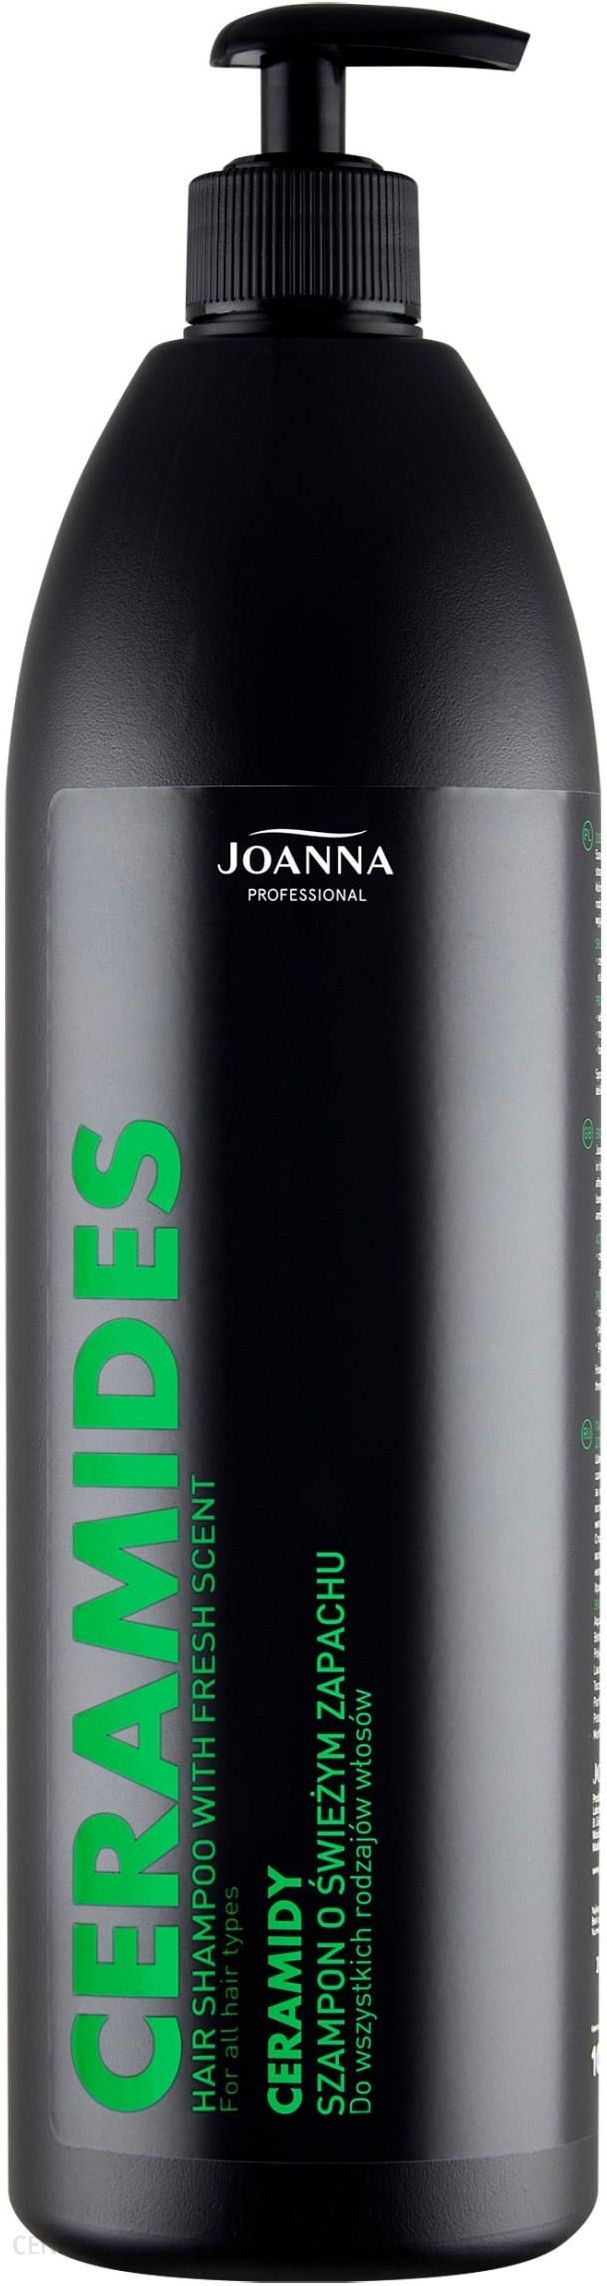 joanna ceramides szampon opinie